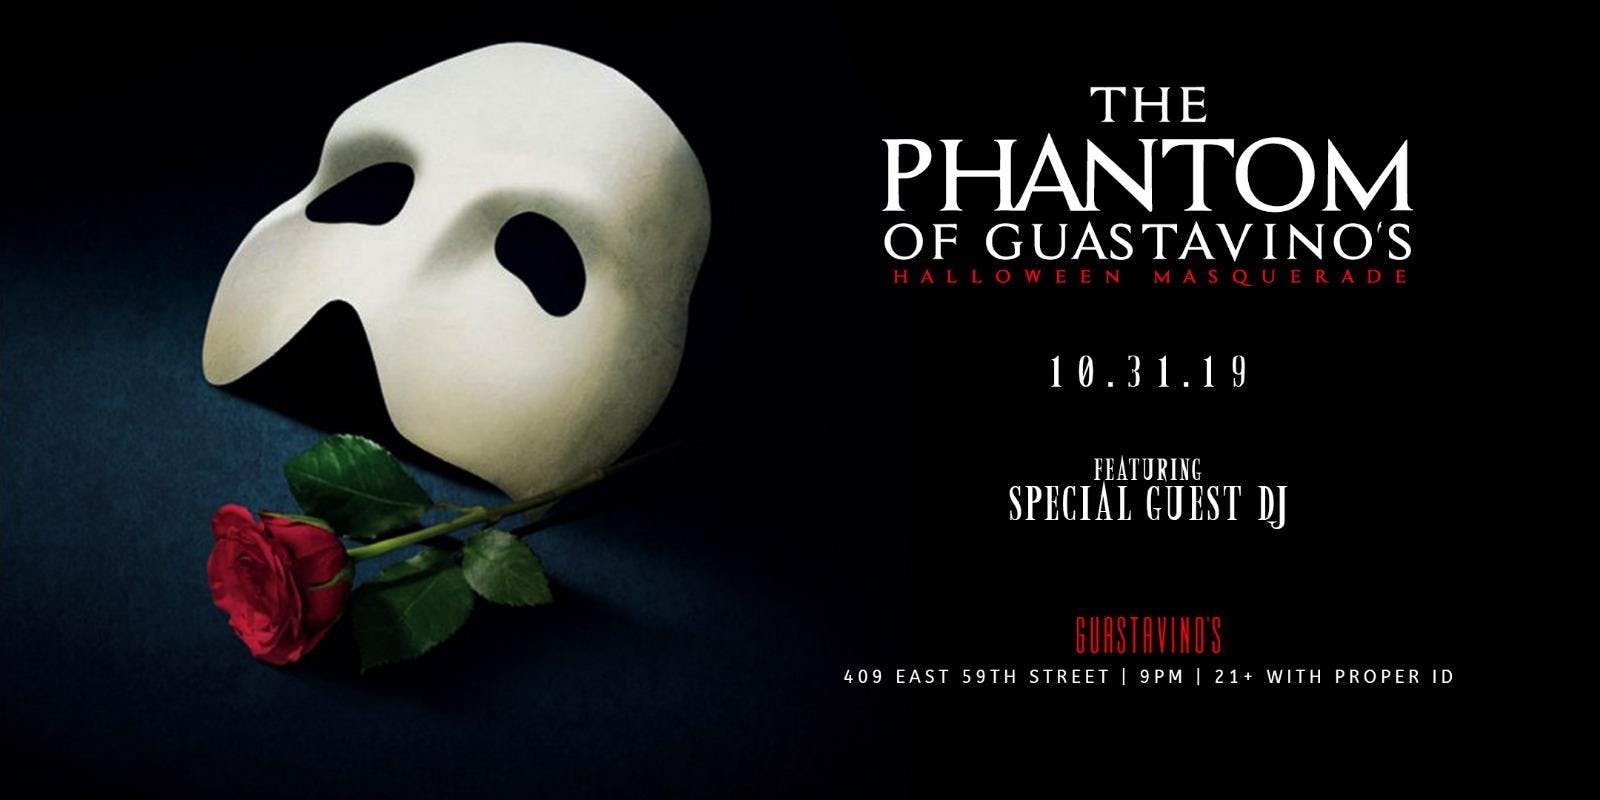 The Phantom of Guastavino's Halloween Masquerade 